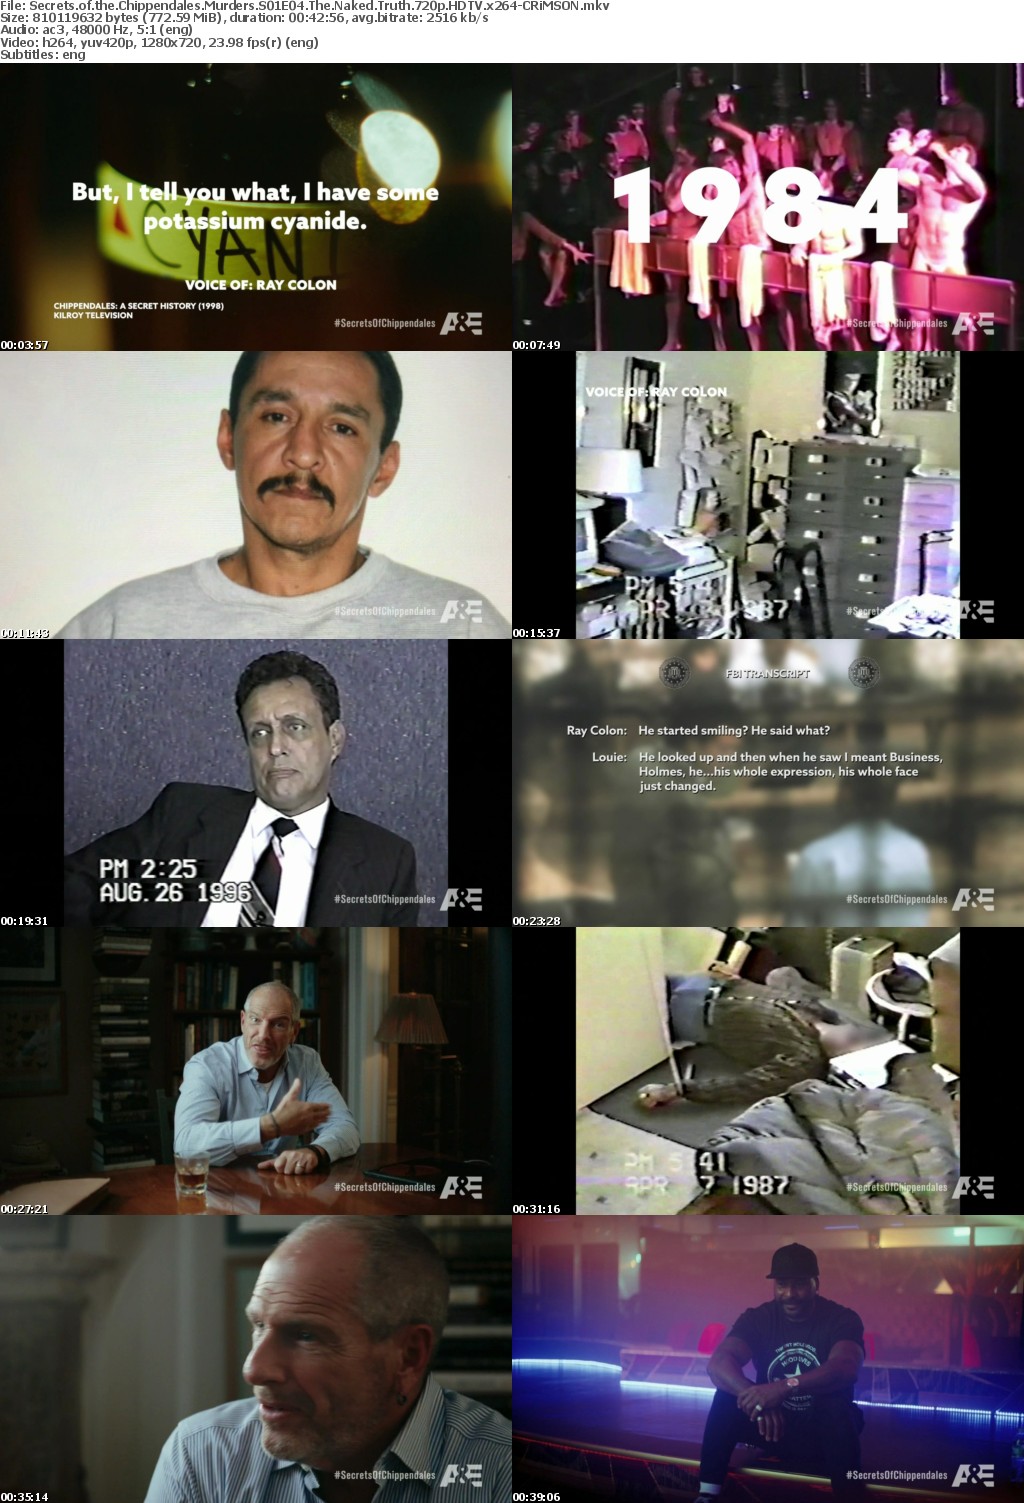 Secrets of the Chippendales Murders S01E04 The Naked Truth 720p HDTV x264-CRiMSON